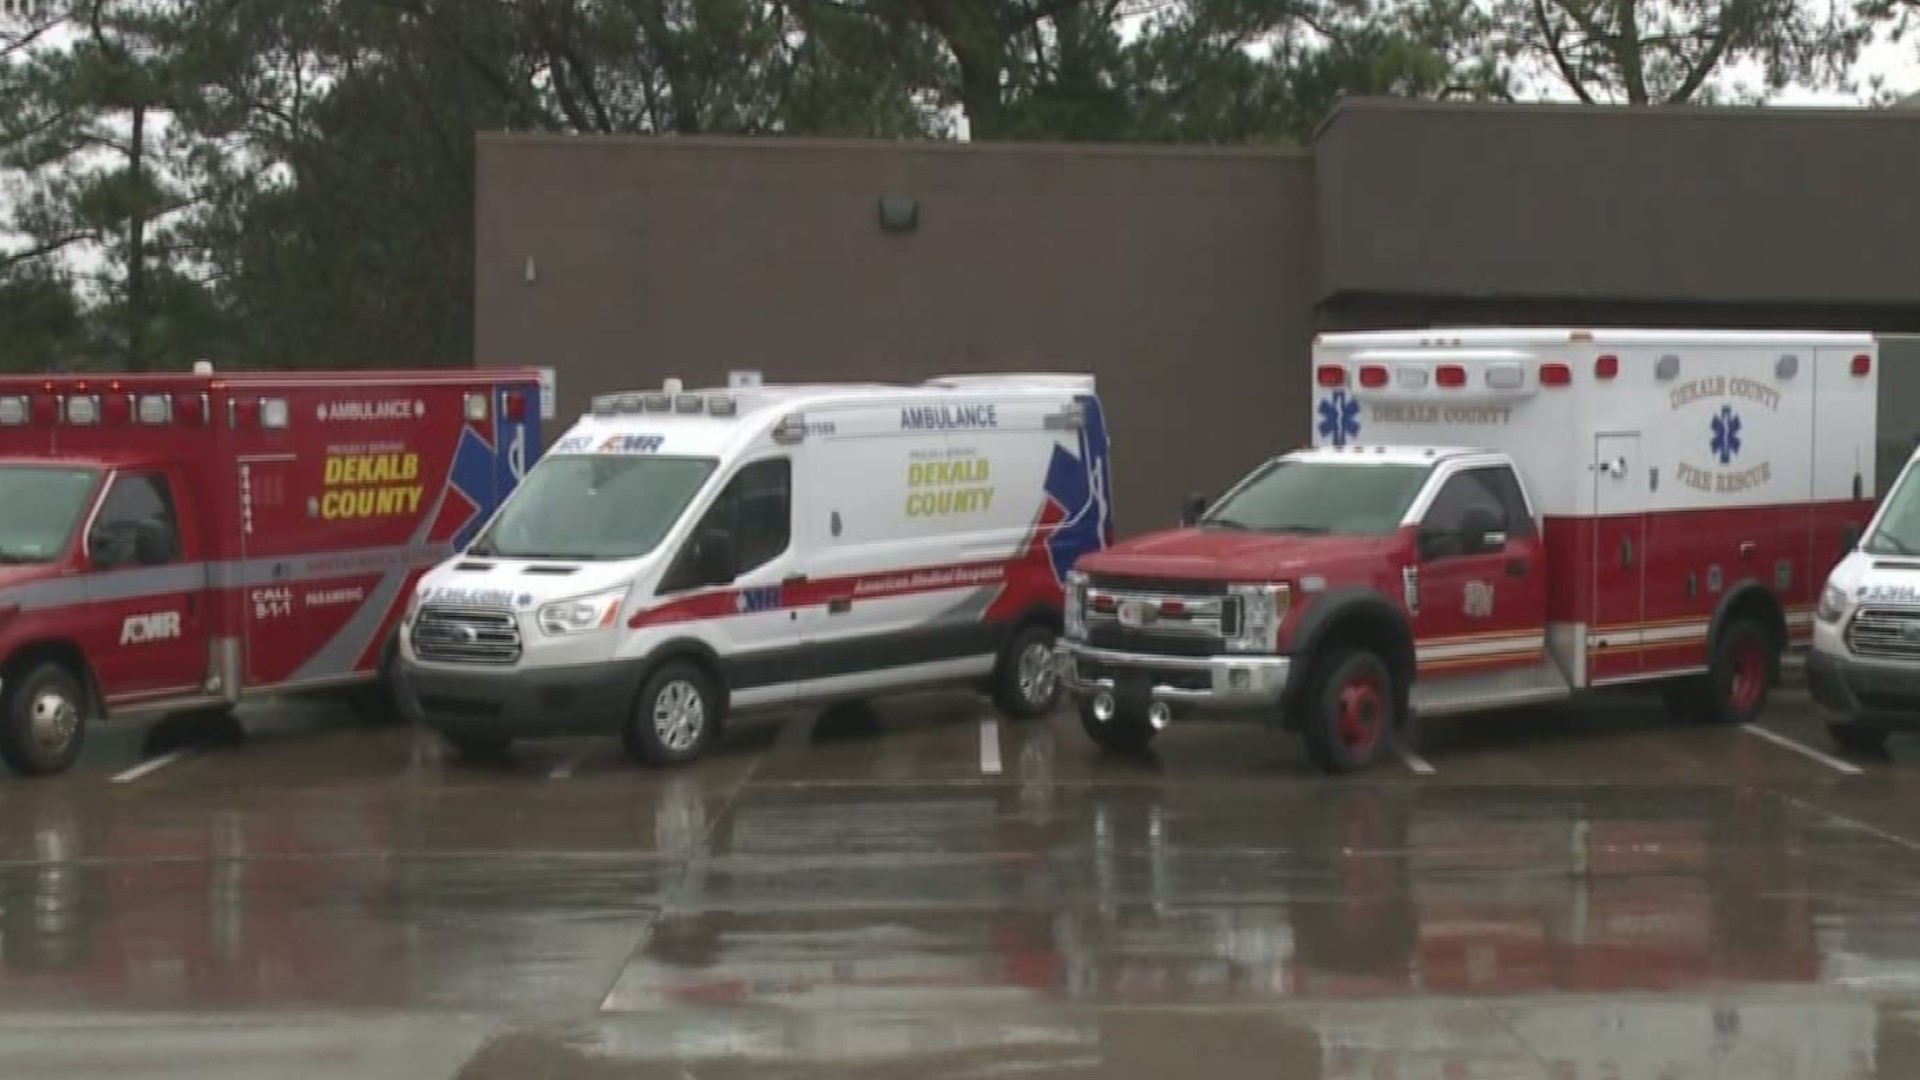 The county spent $2M on new ambulances.